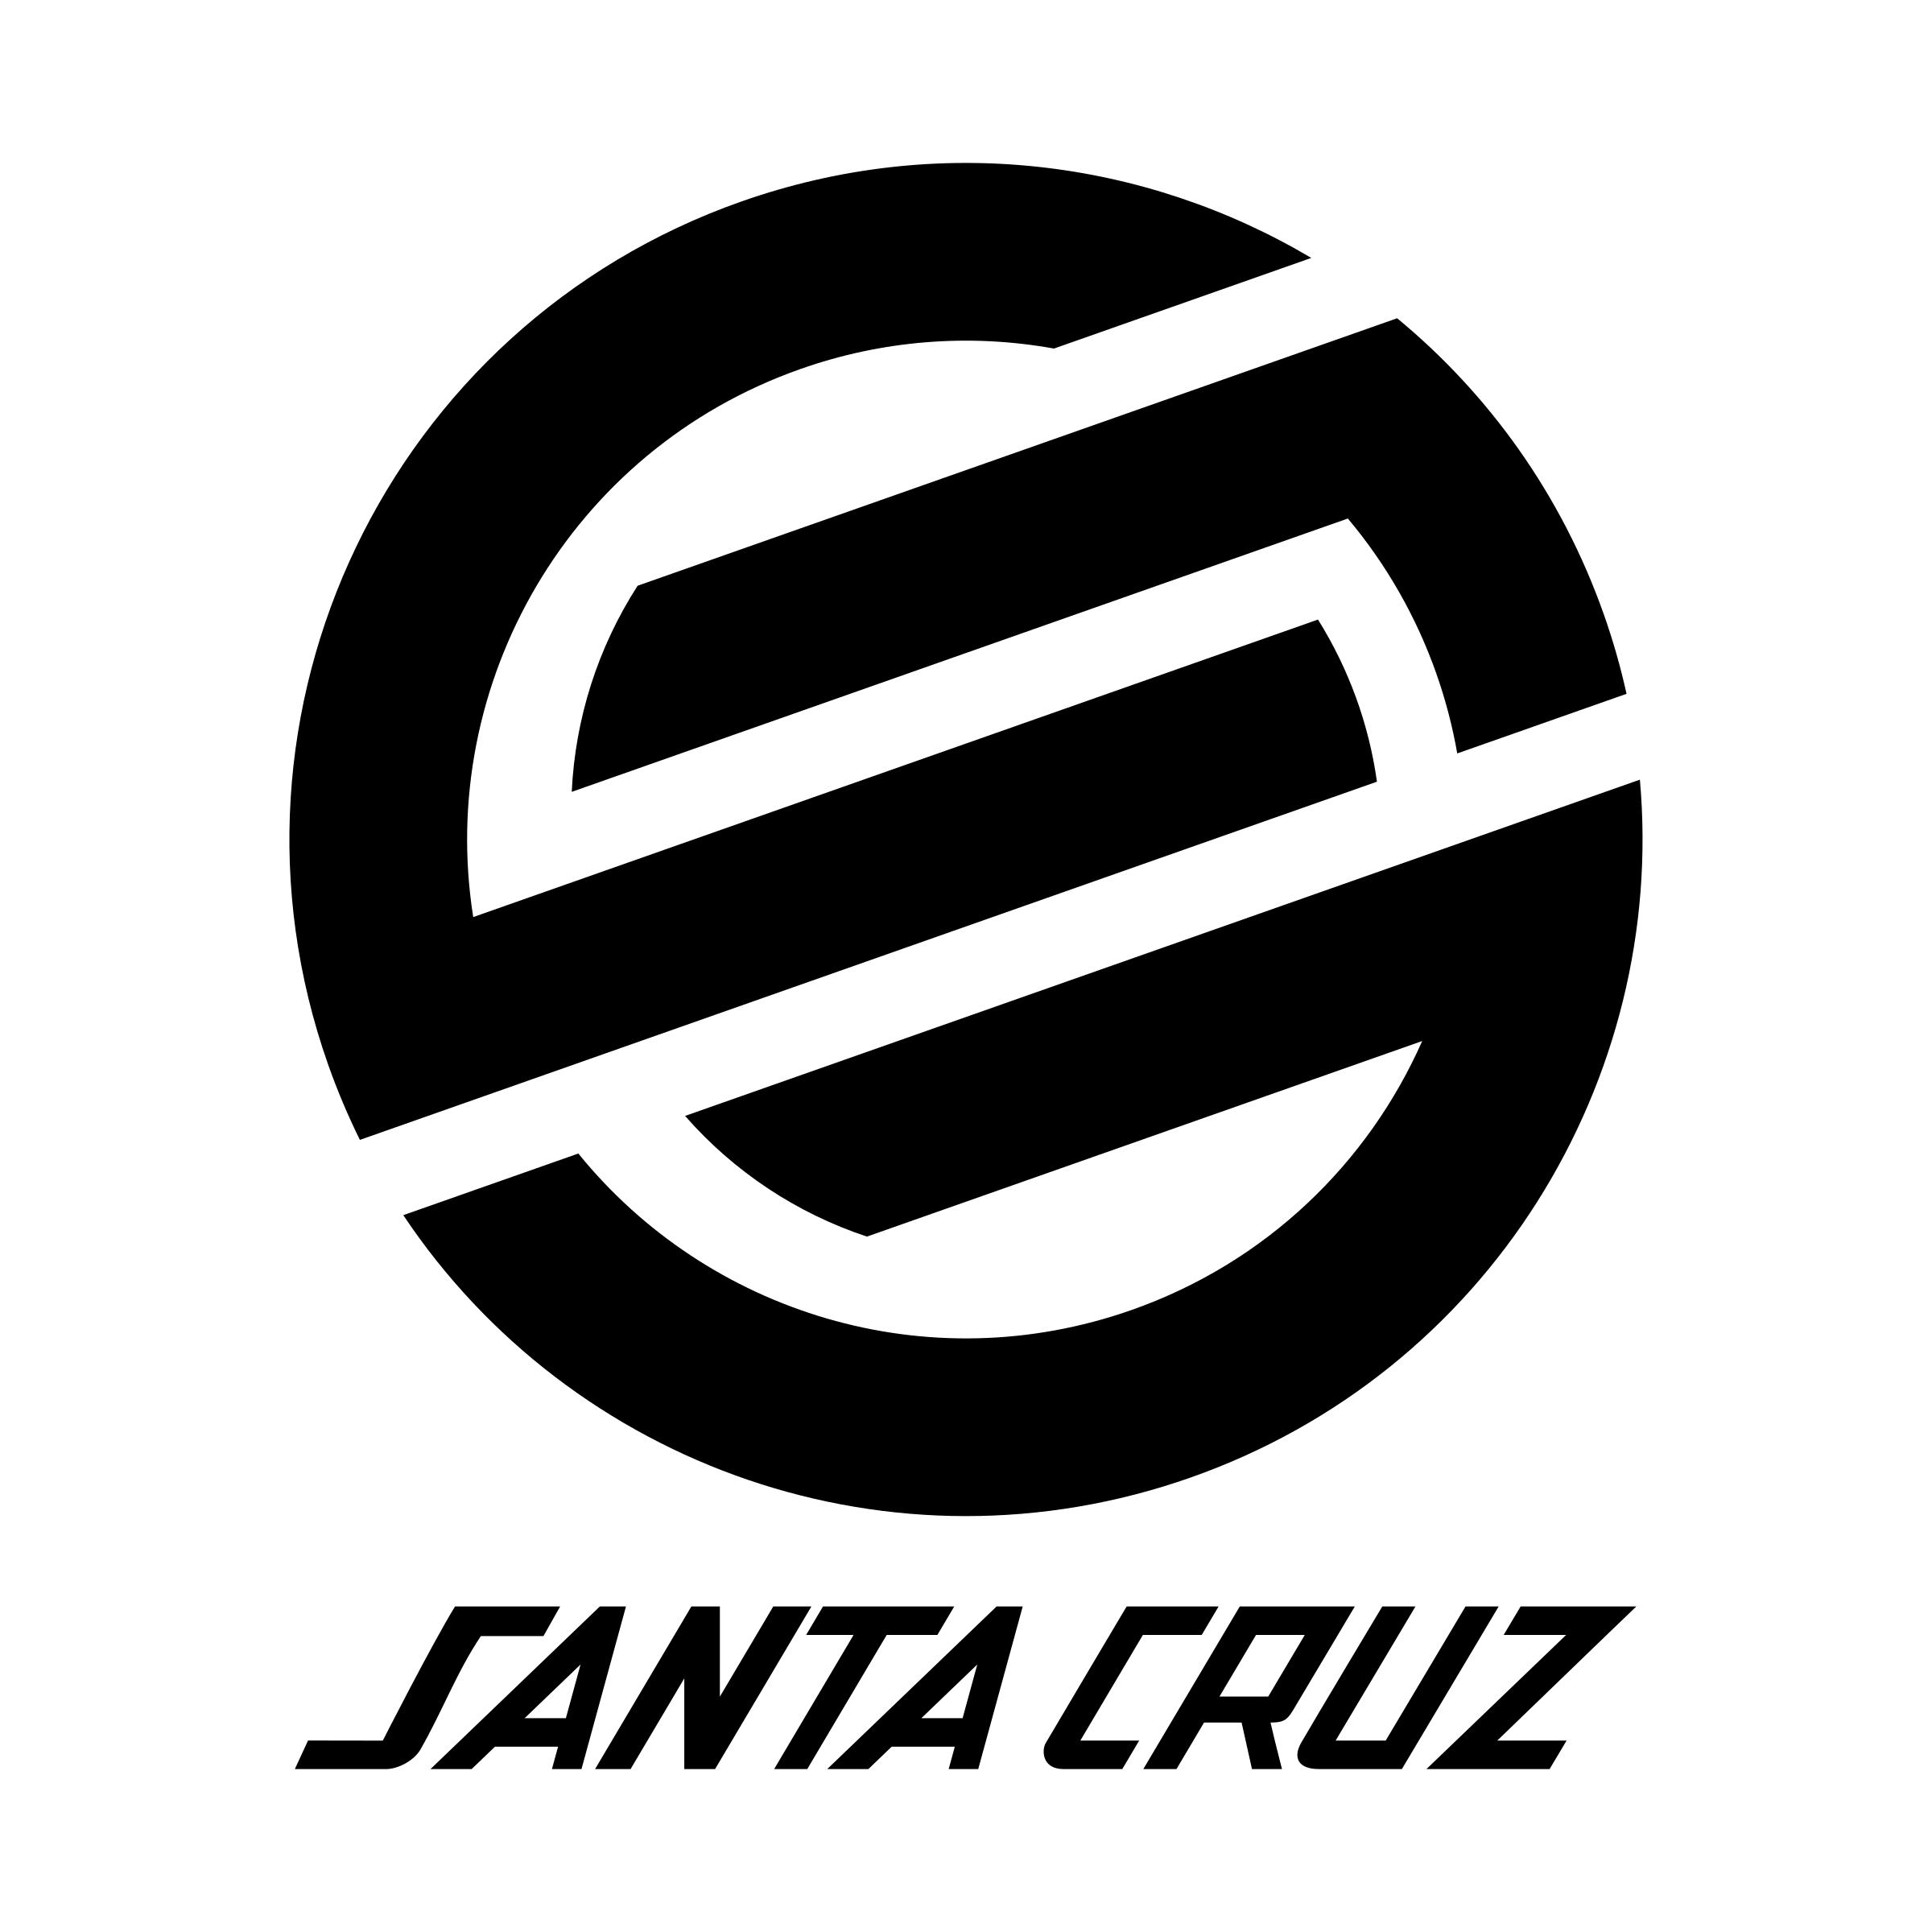 Black and White Santa Cruz Logo - Santa Cruz Logo PNG Transparent & SVG Vector - Freebie Supply